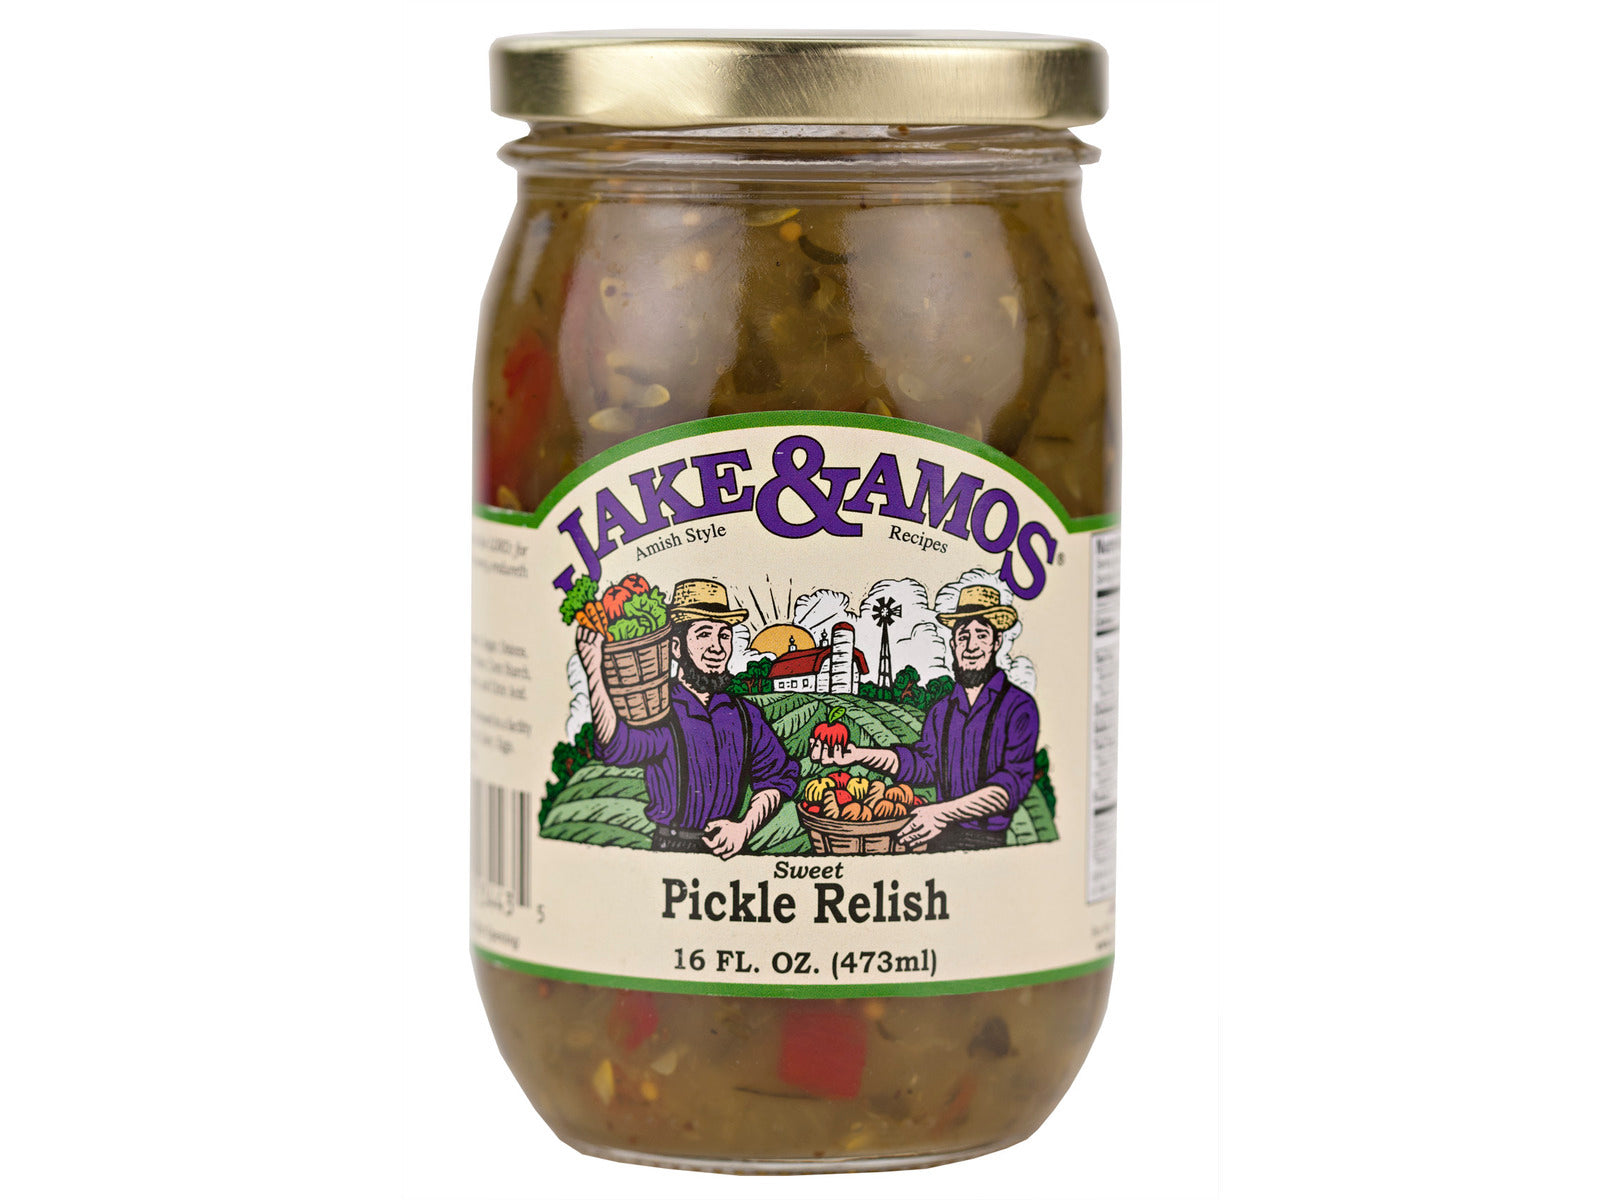 Amish - Relish - Pickle Relish - Sweet - Jake & Amos